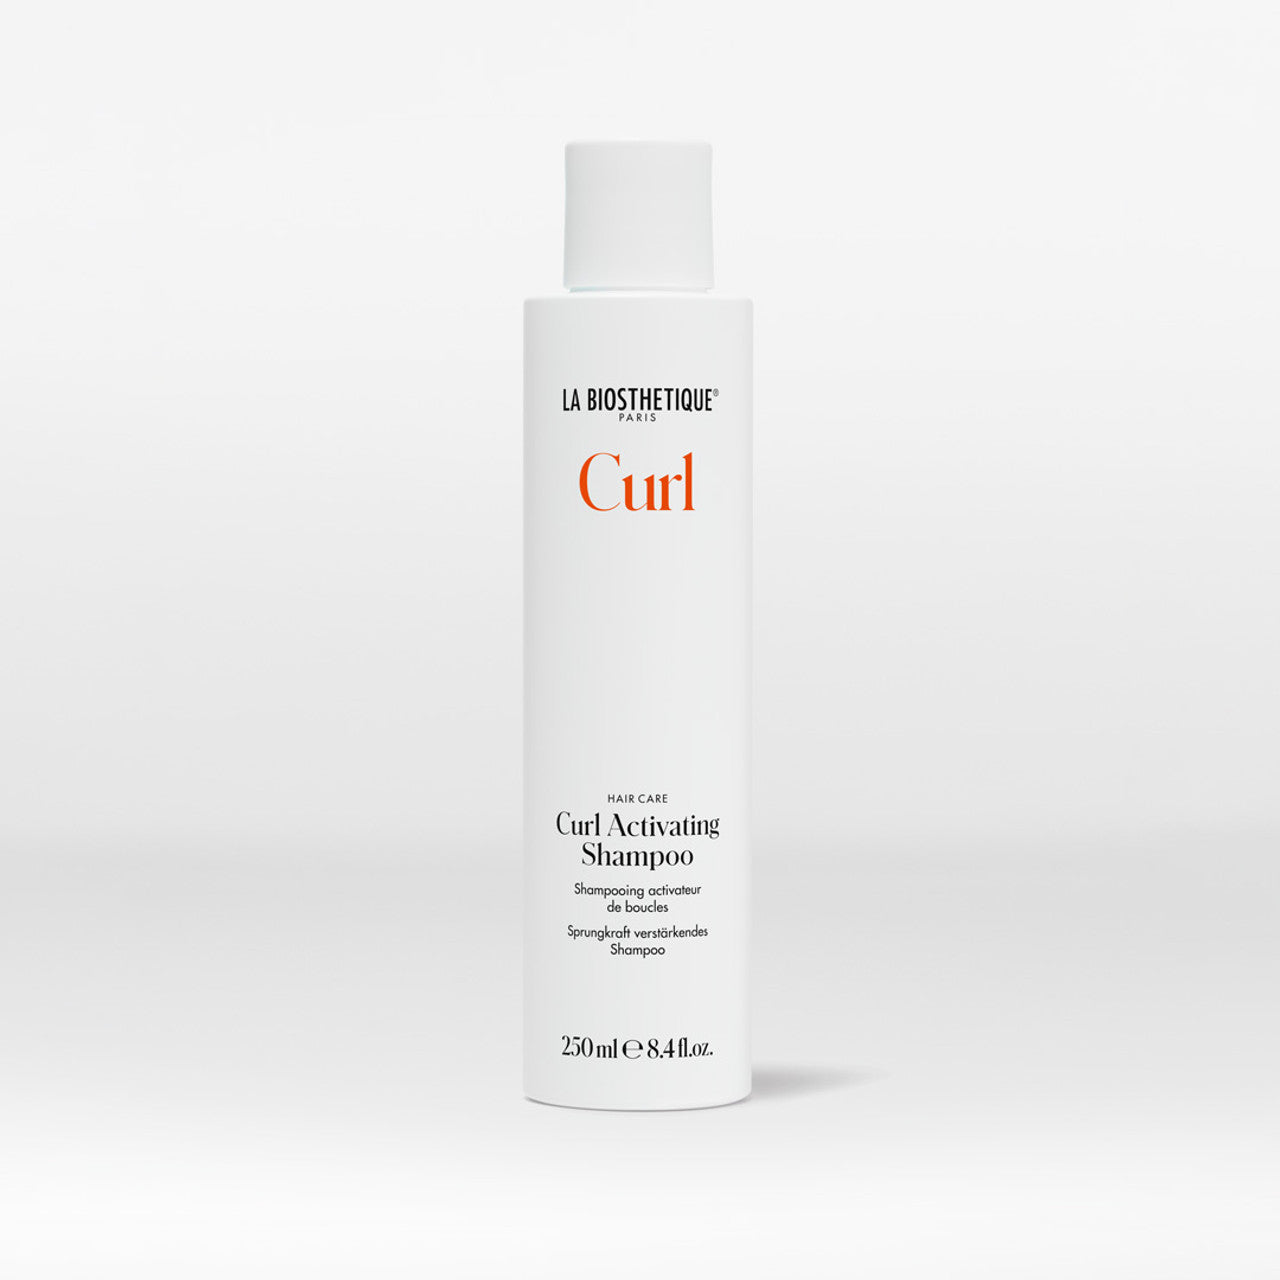 La Biosthetique's Curl range - Curl Activating Shampoo